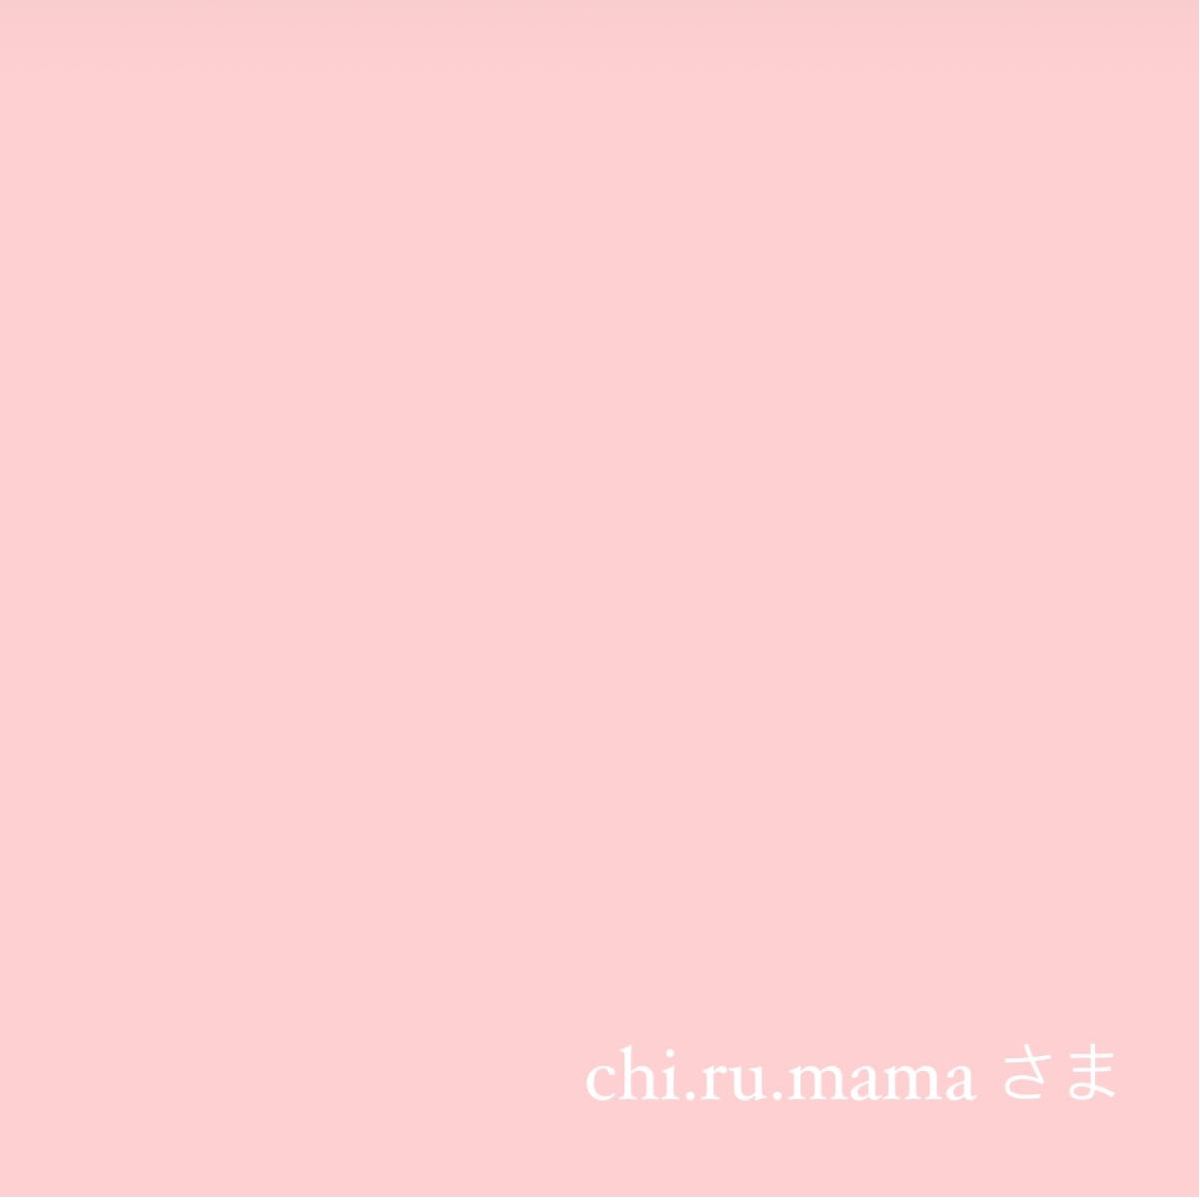 chi.ru.mamaさま